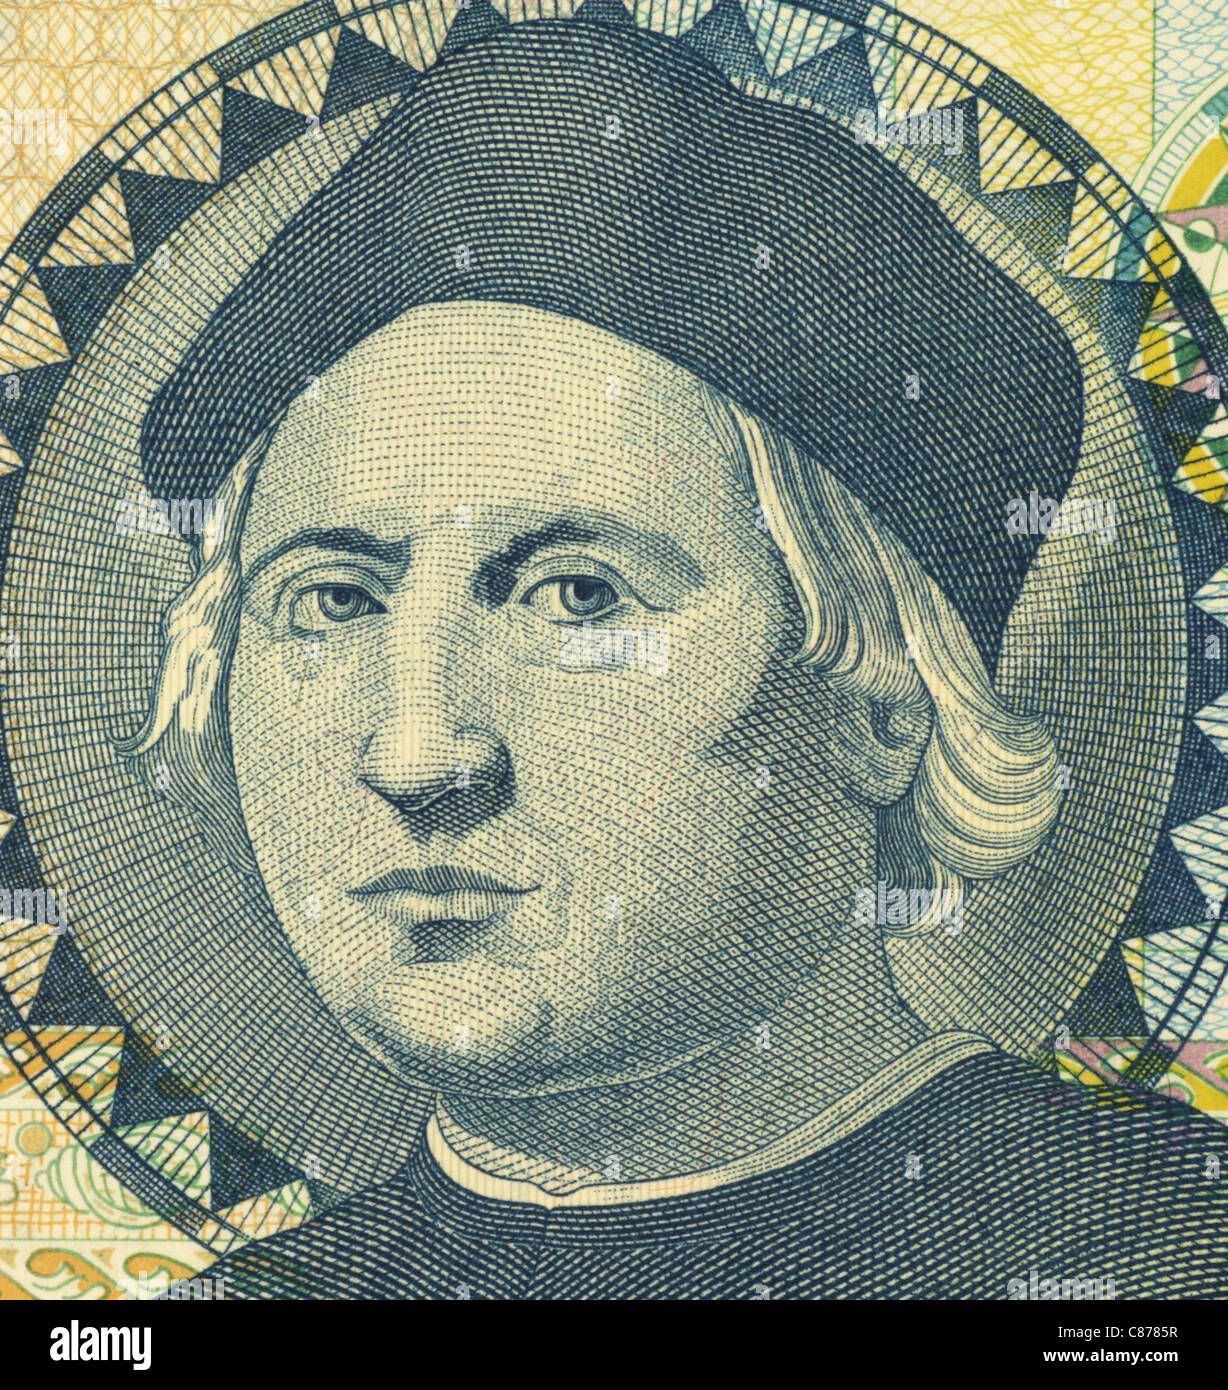 Christopher Columbus (1451-1506) on 1 Dollar 1992 Banknote from Bahamas. Italian explorer, colonizer and navigator. Stock Photo